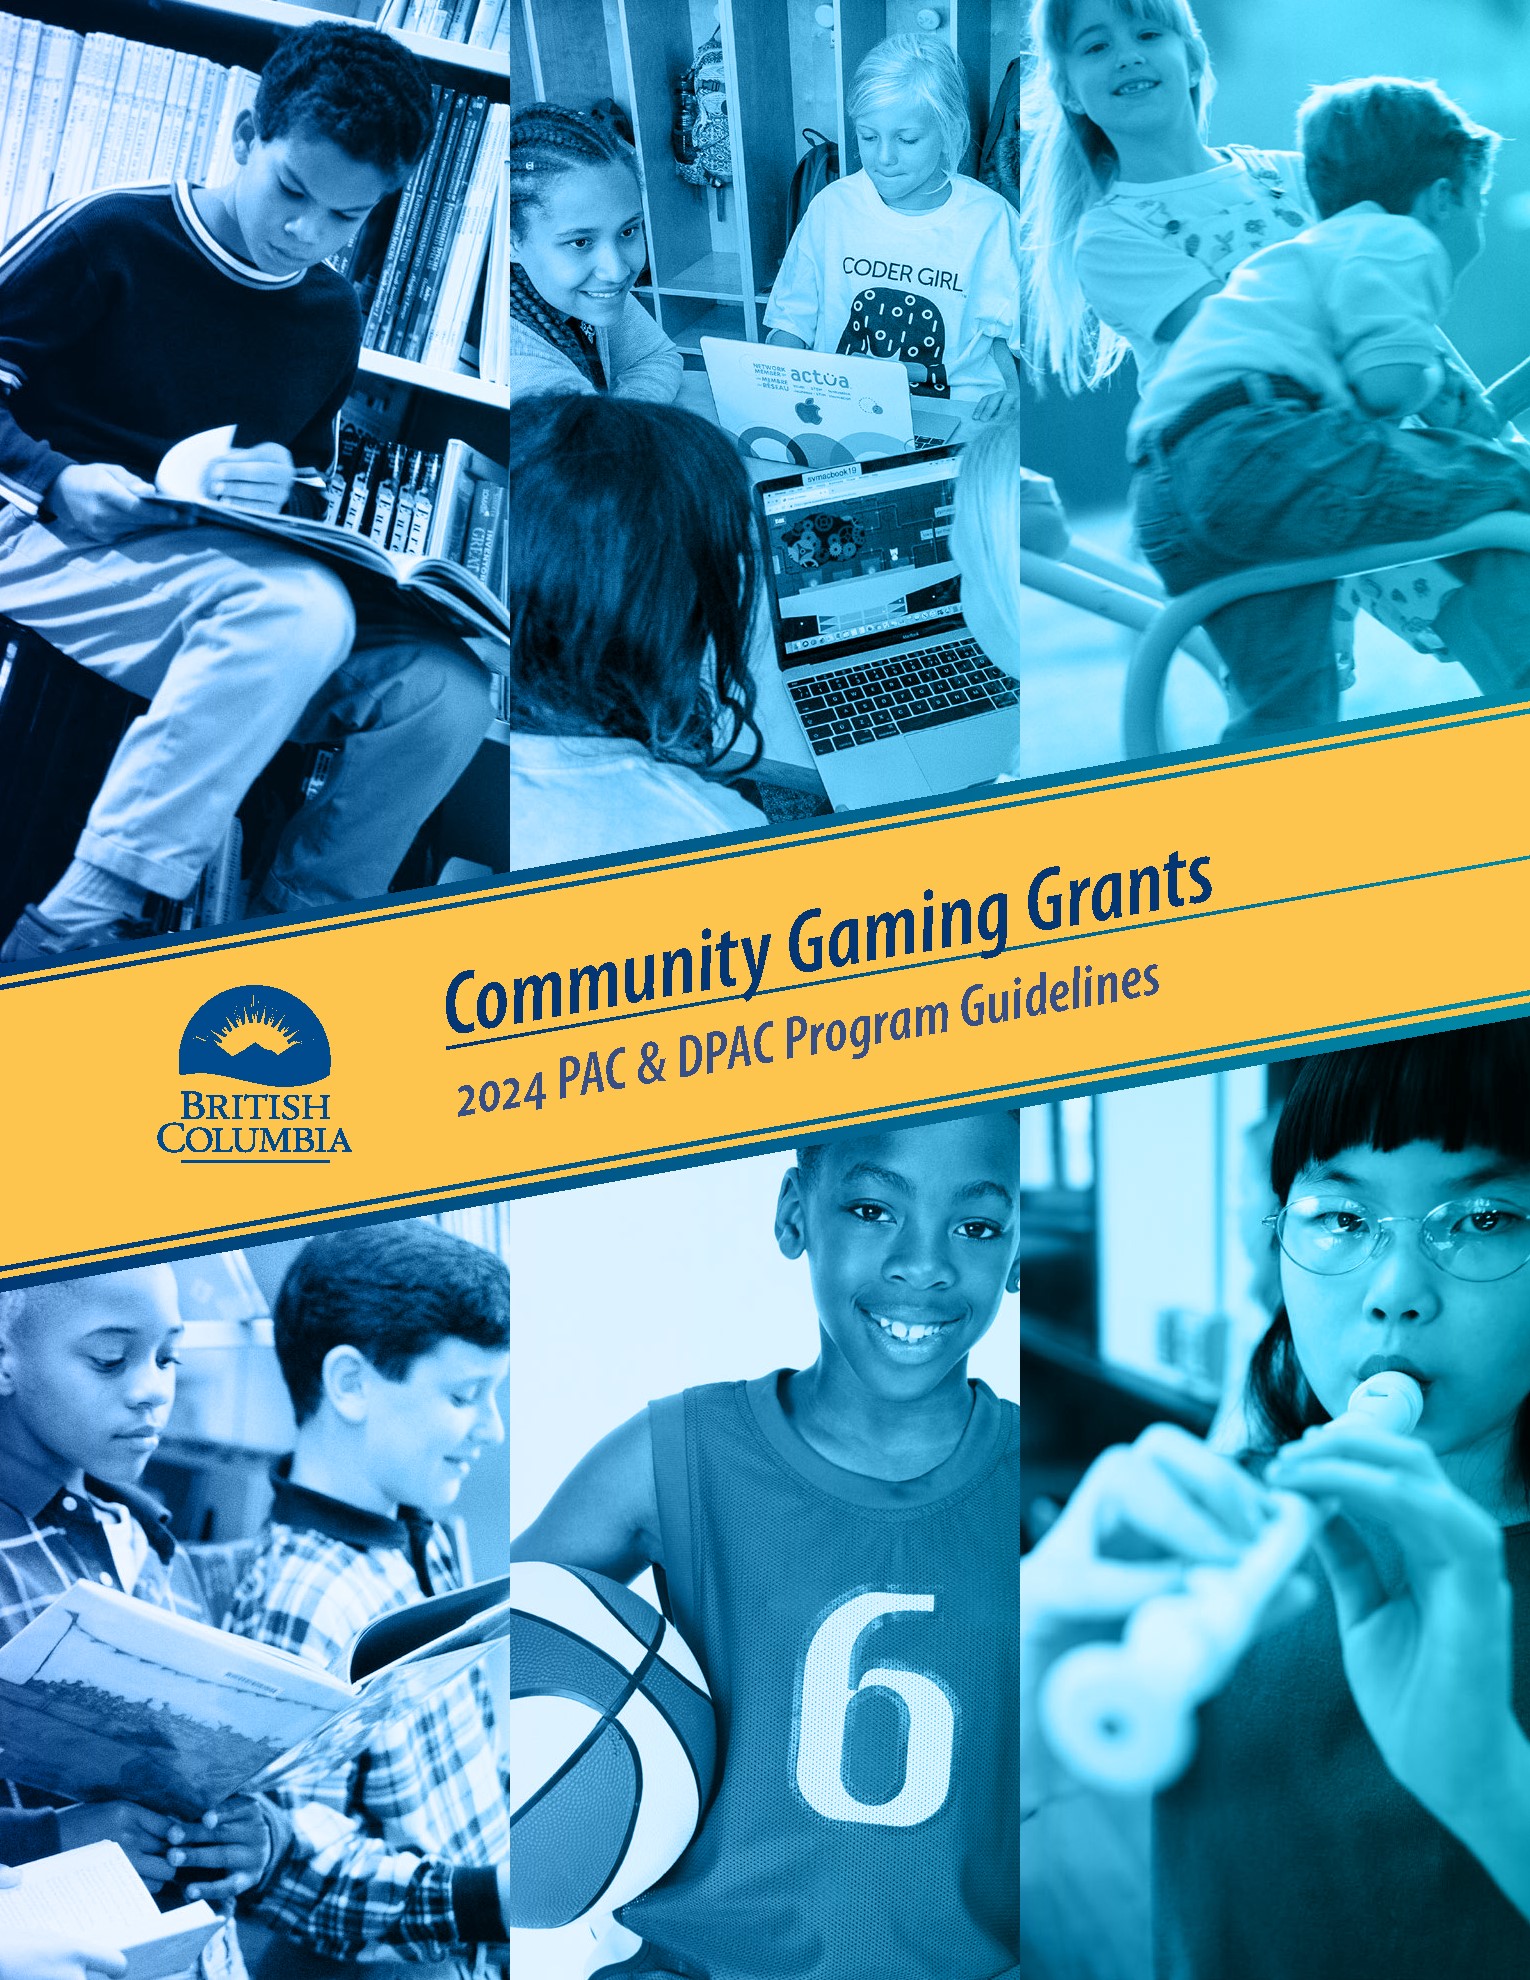 Community Gaming Grants: 2024 PAC & DPAC Program Guidelines